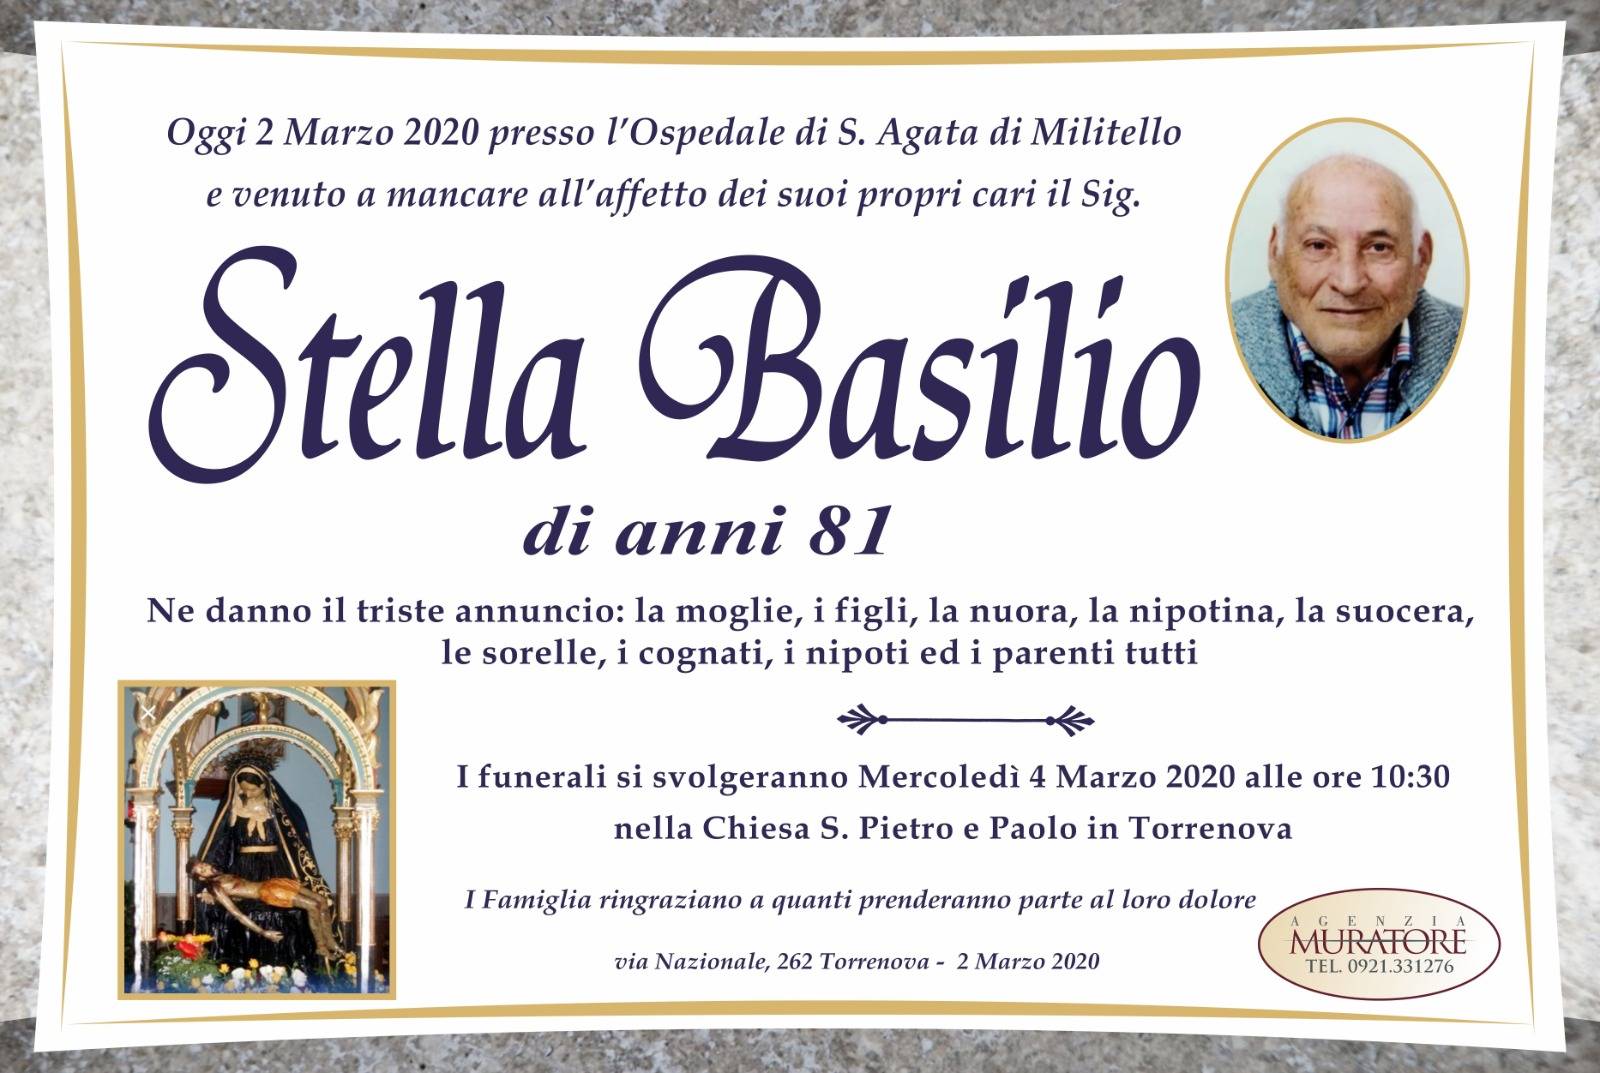 Basilio Stella